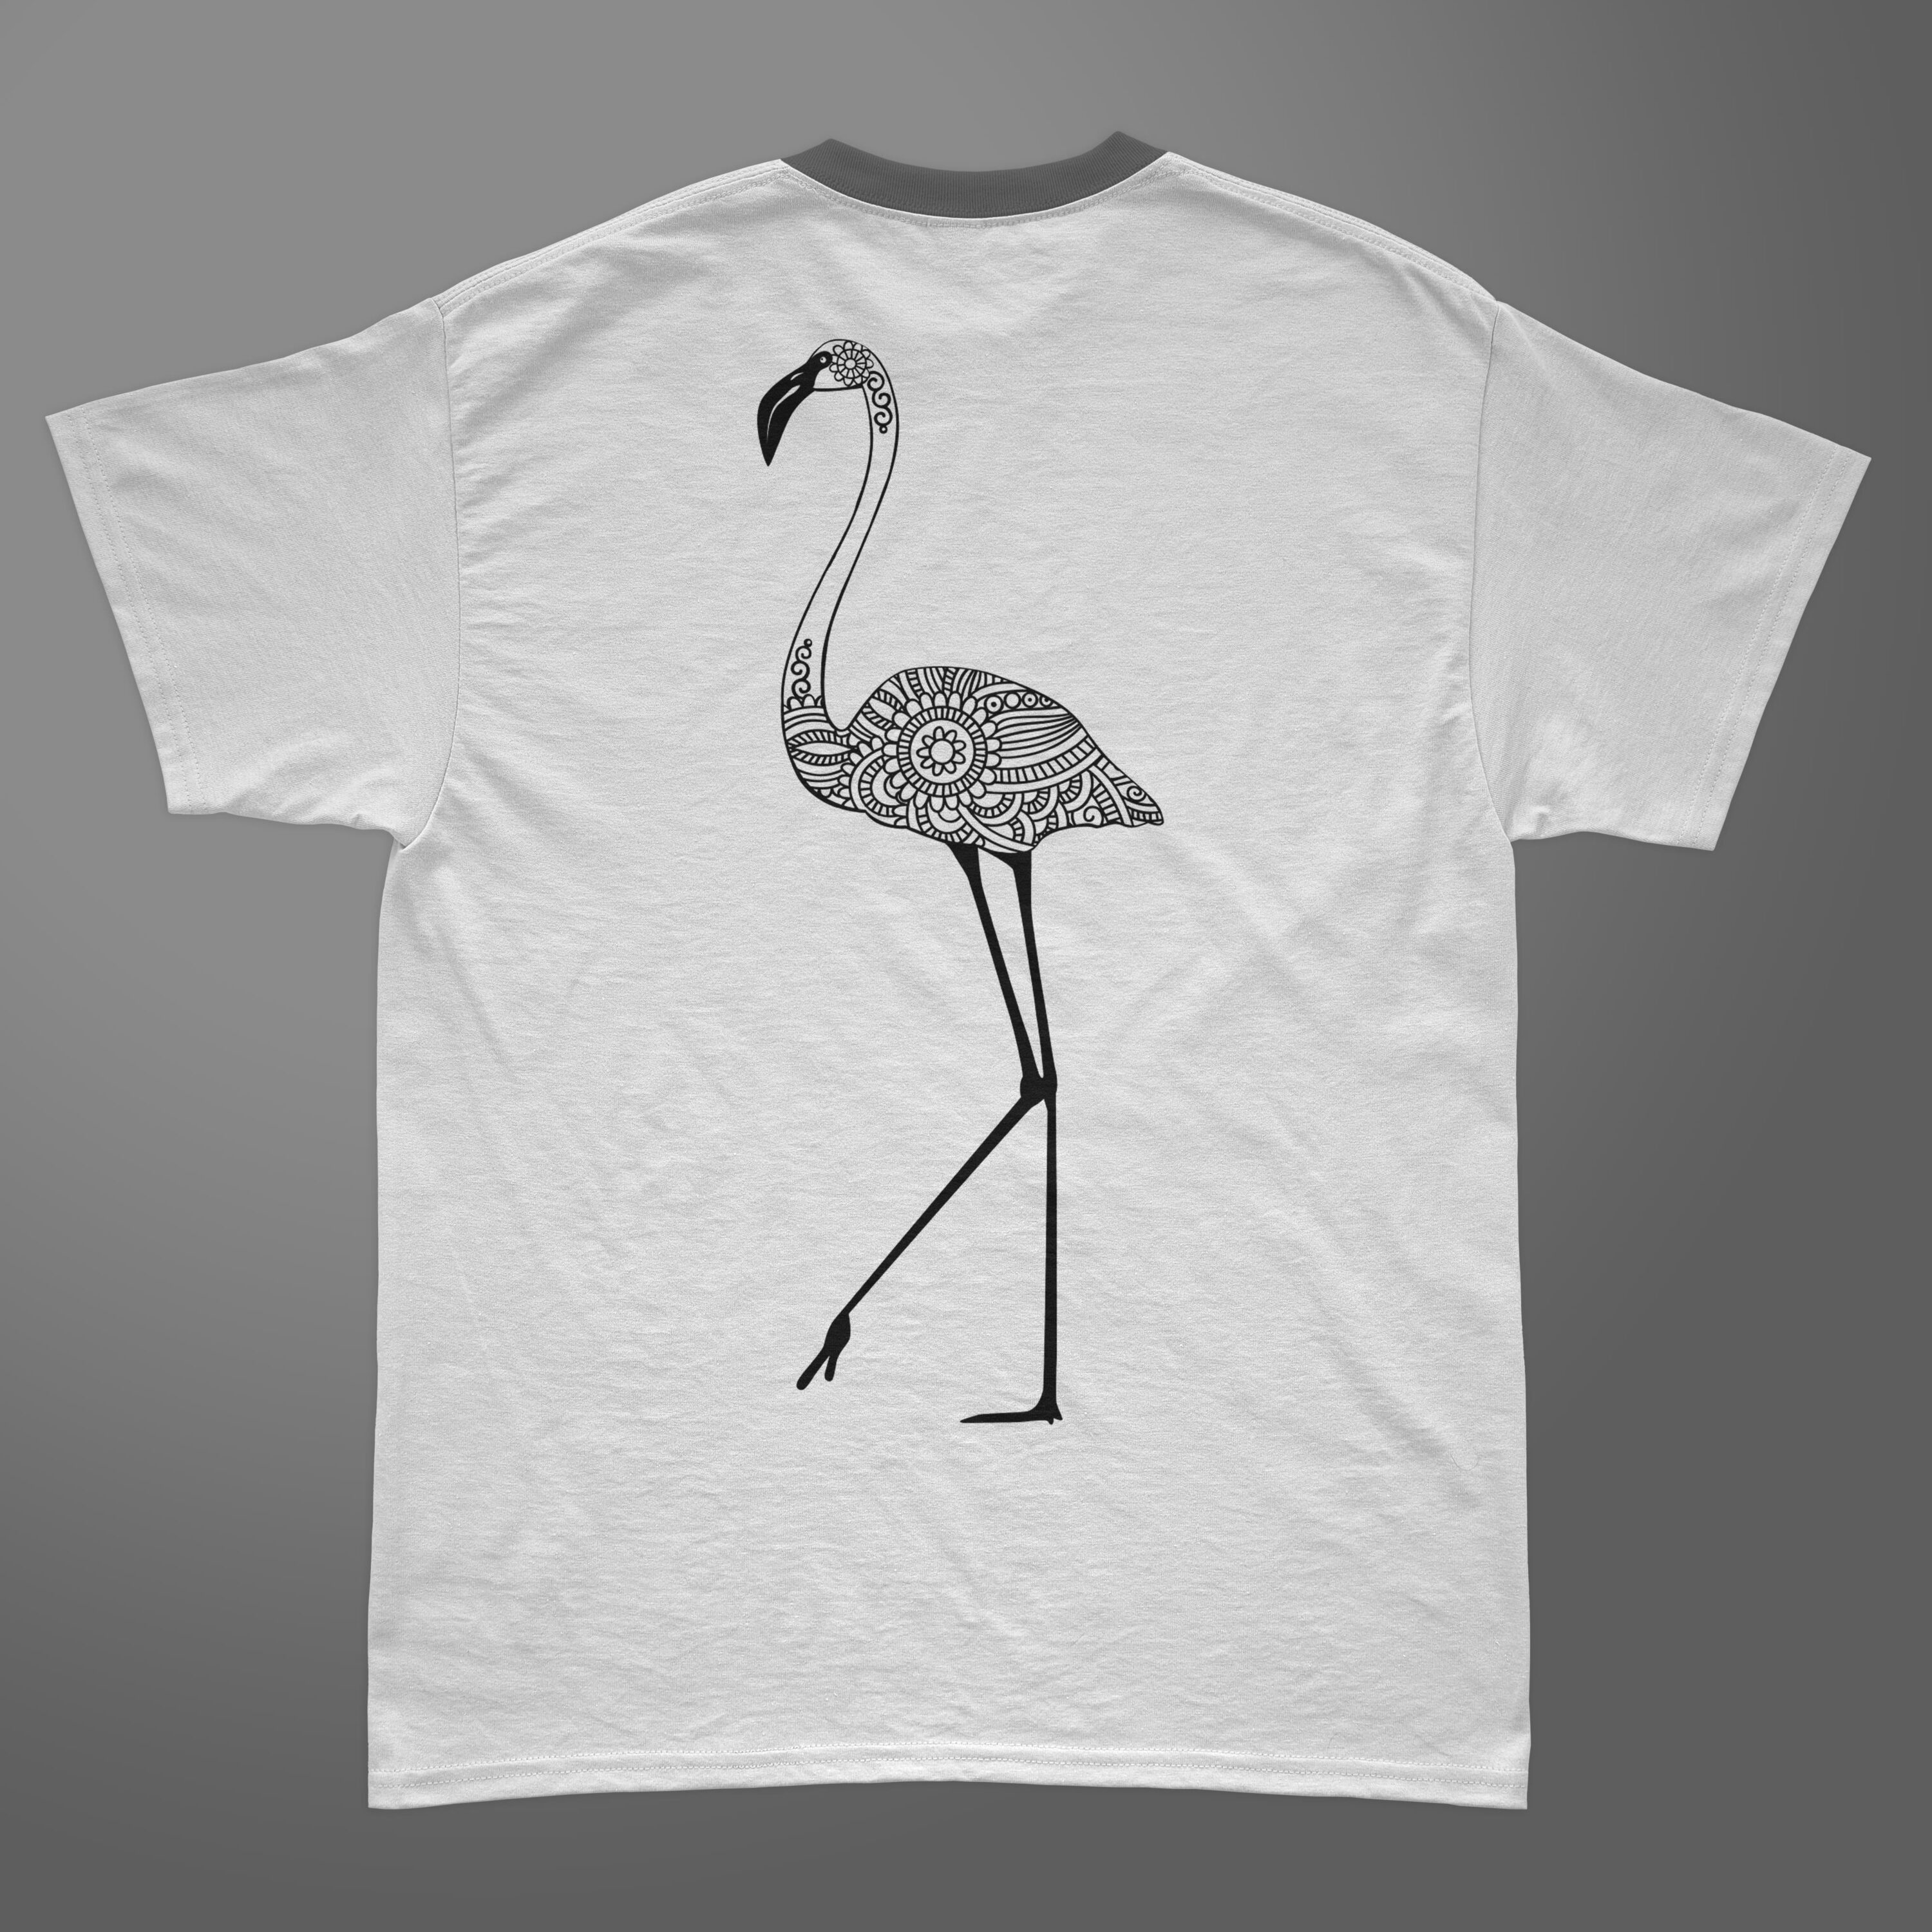 Classic flamingo mandala on the t-shirt.